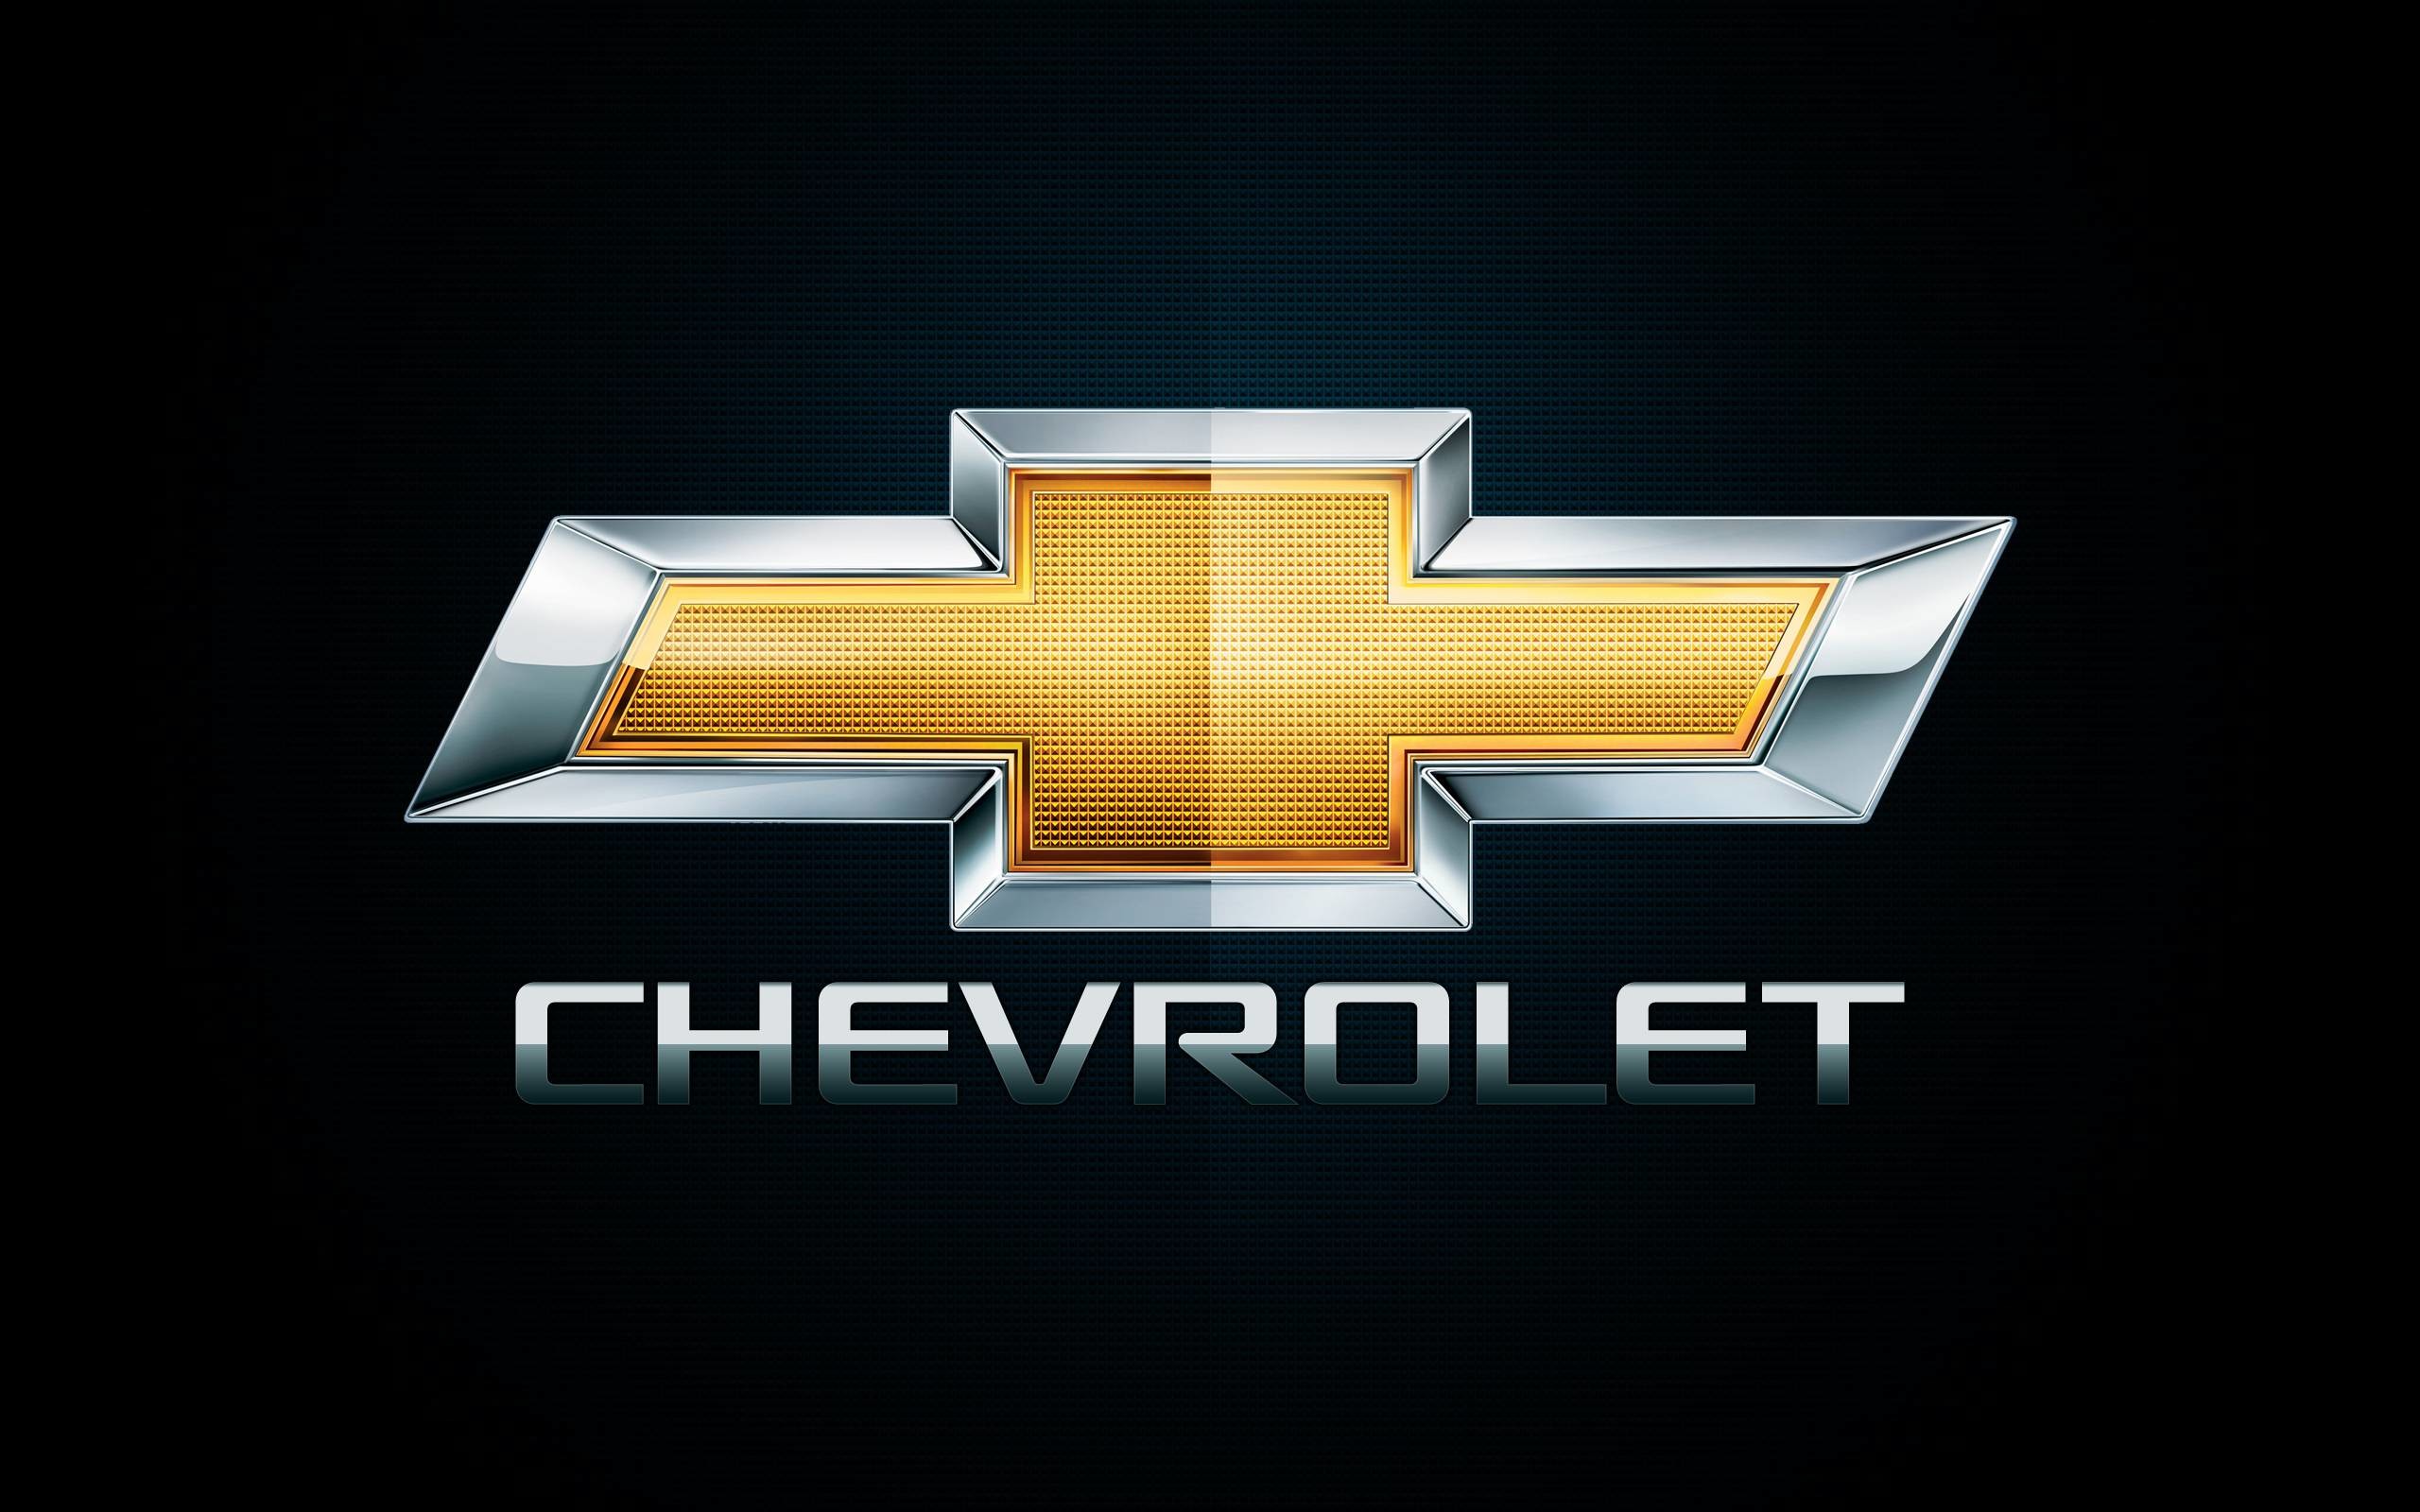 Chevrolet Logo Wallpapers – Full HD wallpaper search